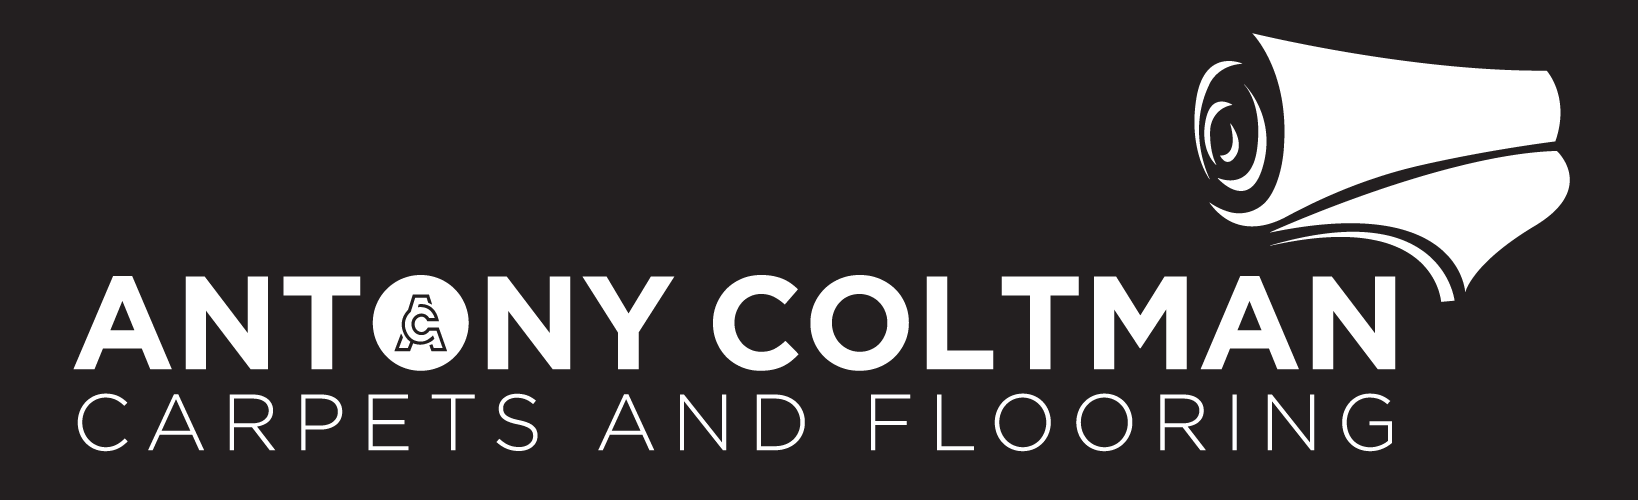 Antony Coltman Carpets & Flooring logo